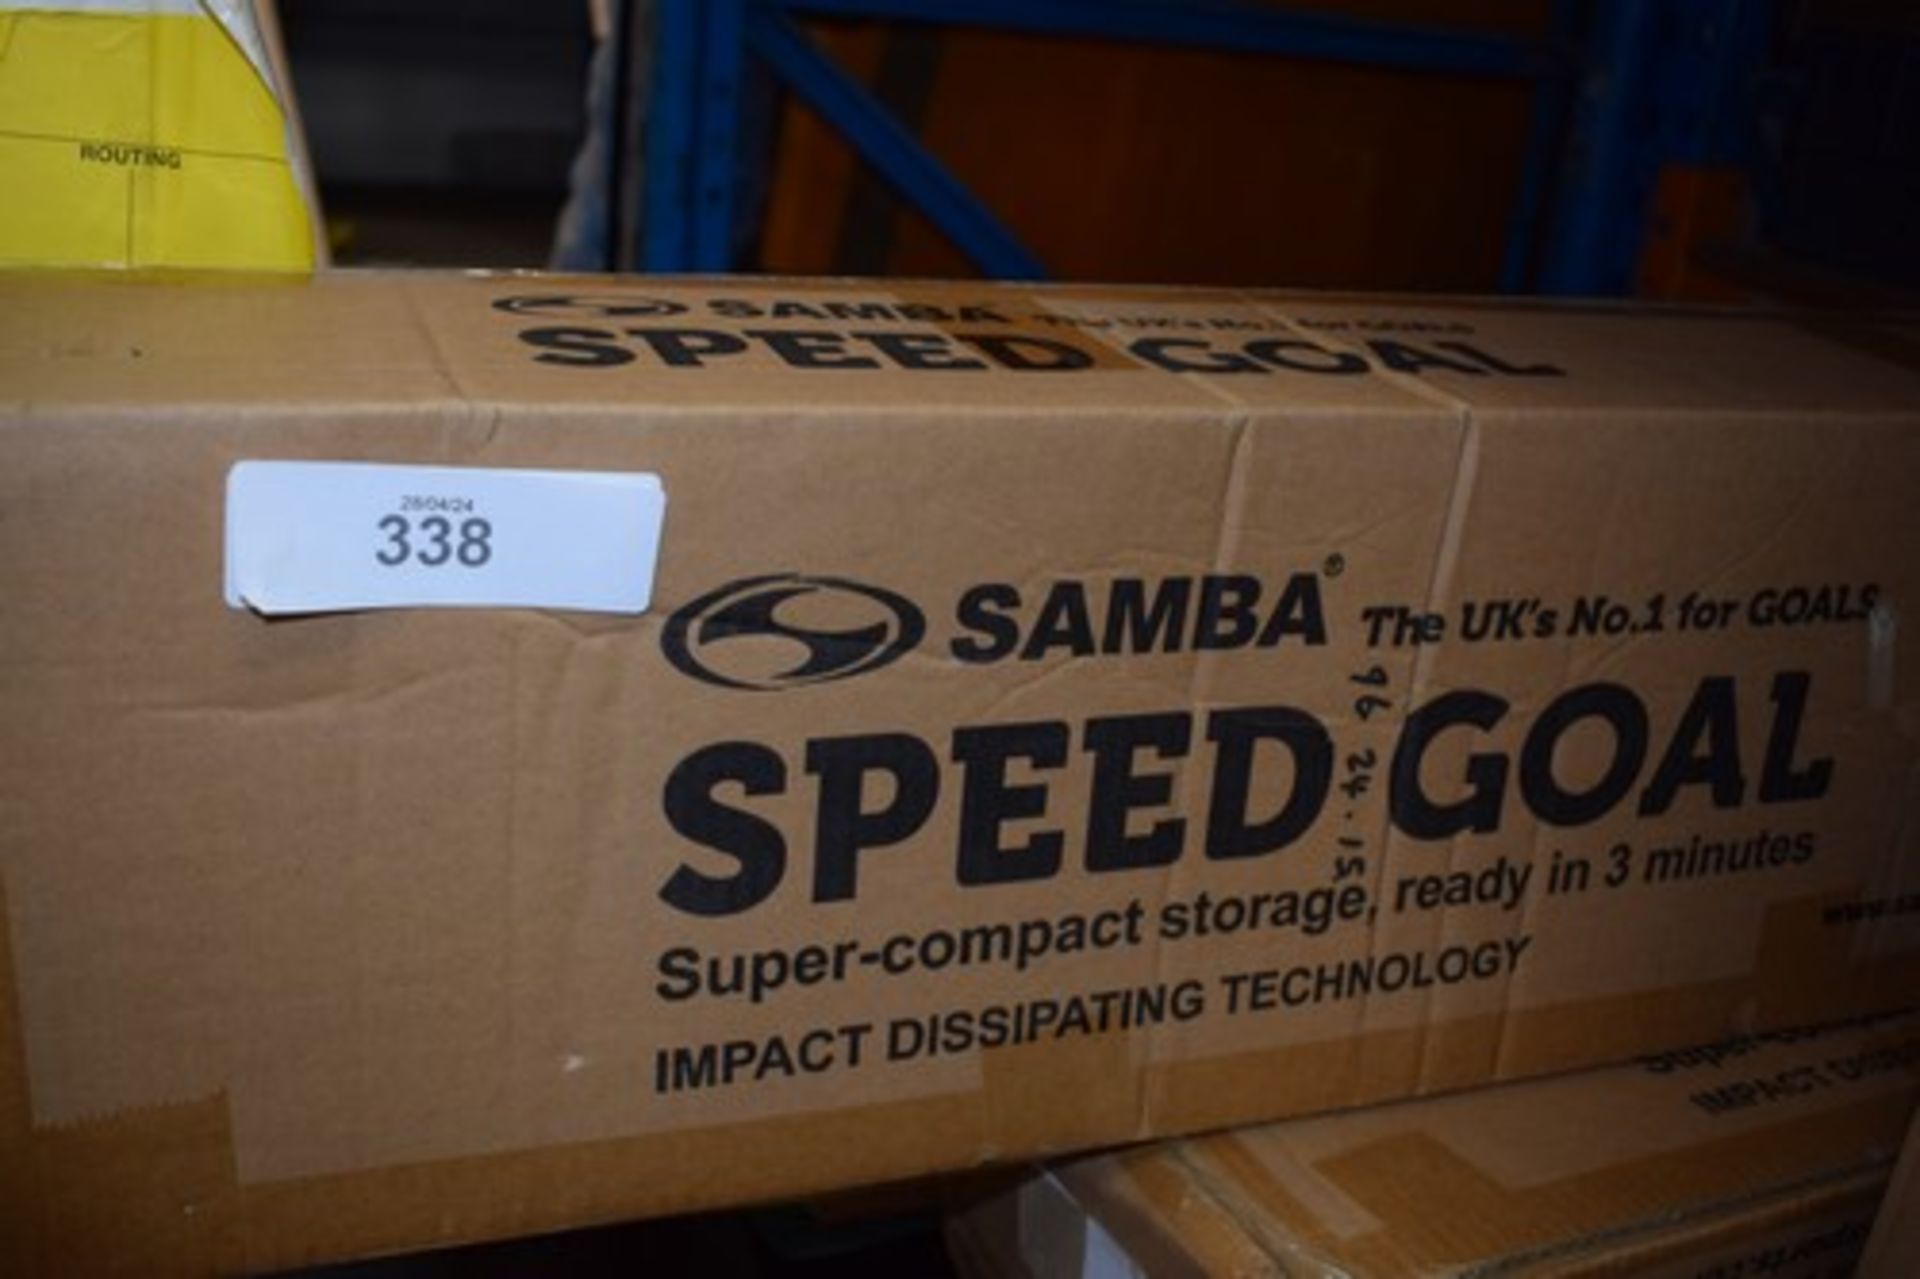 1 x Samba 8ft x 6ft speed goal, EAN: 5036129009520 - sealed new in box (ES12)